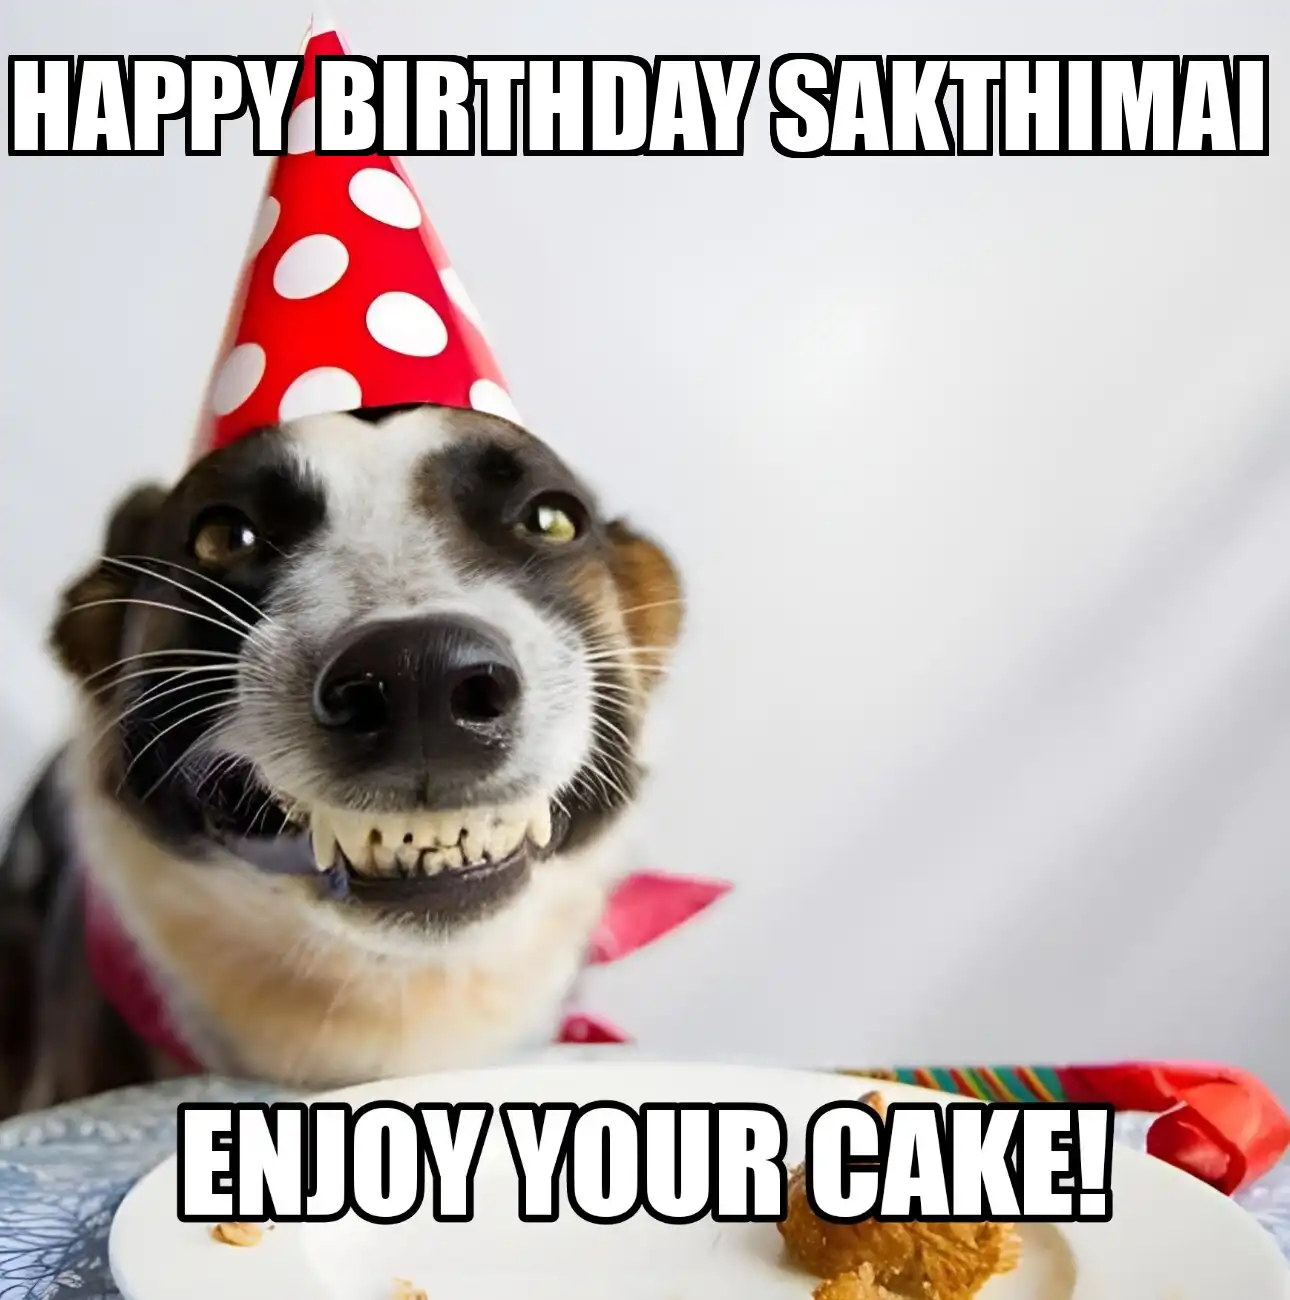 Happy Birthday Sakthimai Enjoy Your Cake Dog Meme